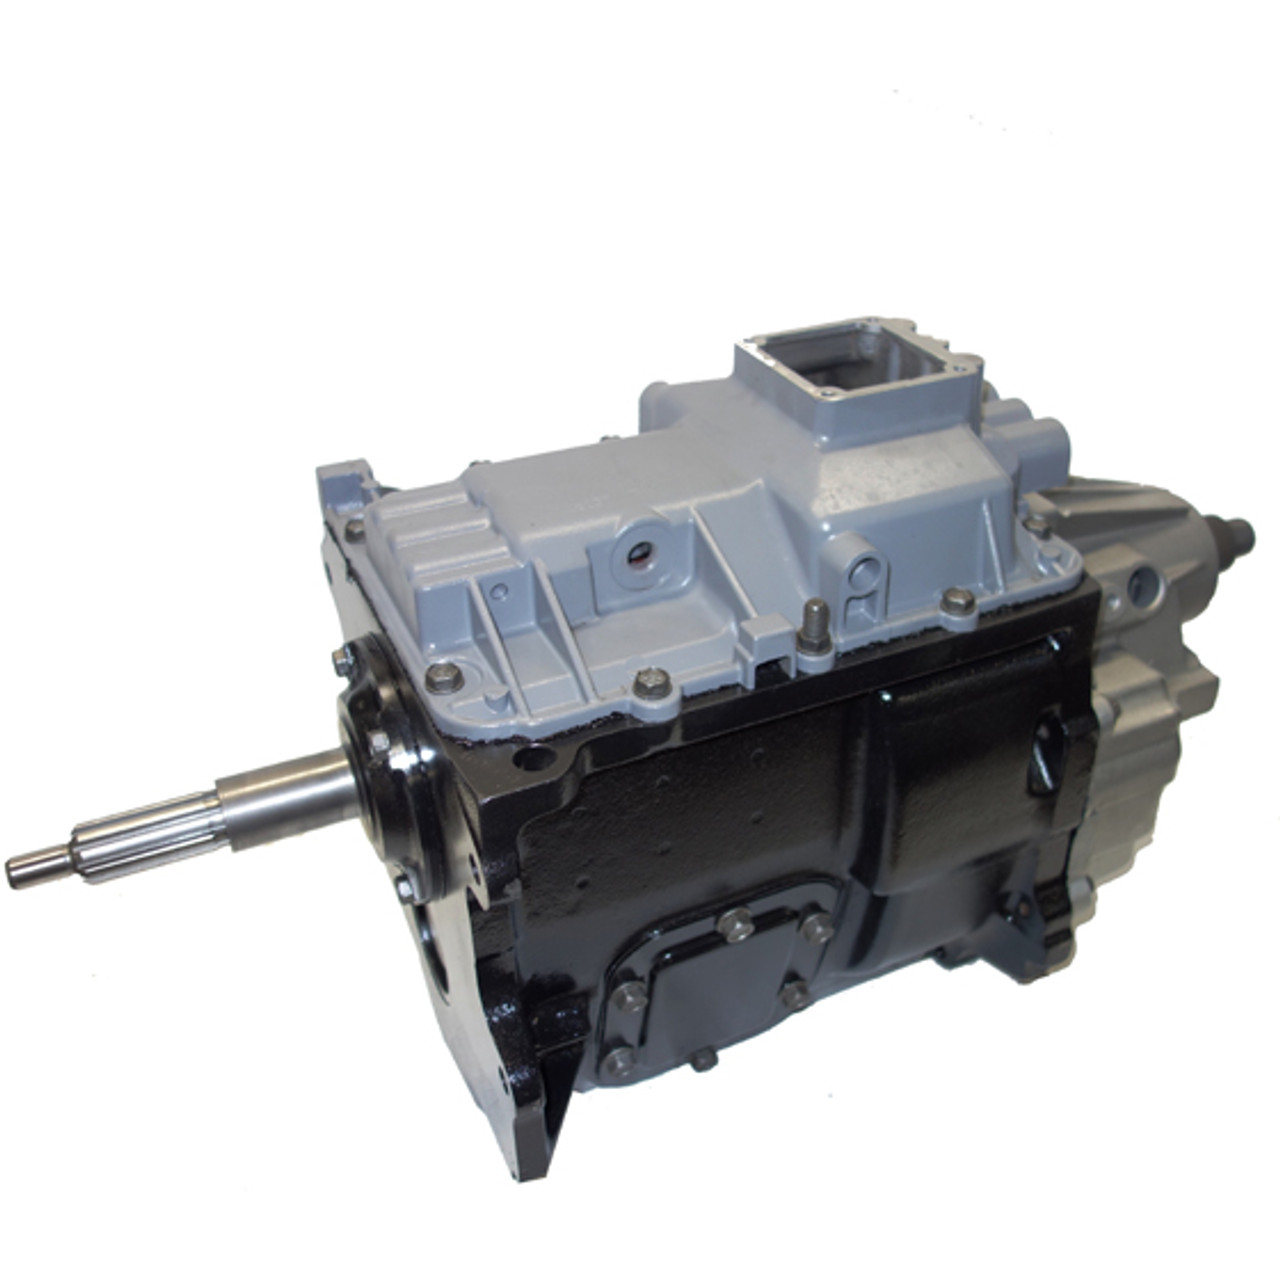 NV4500 Manual Transmission for GM 94-95 Pickup 2WD 5 Speed Zumbrota Drivetrain